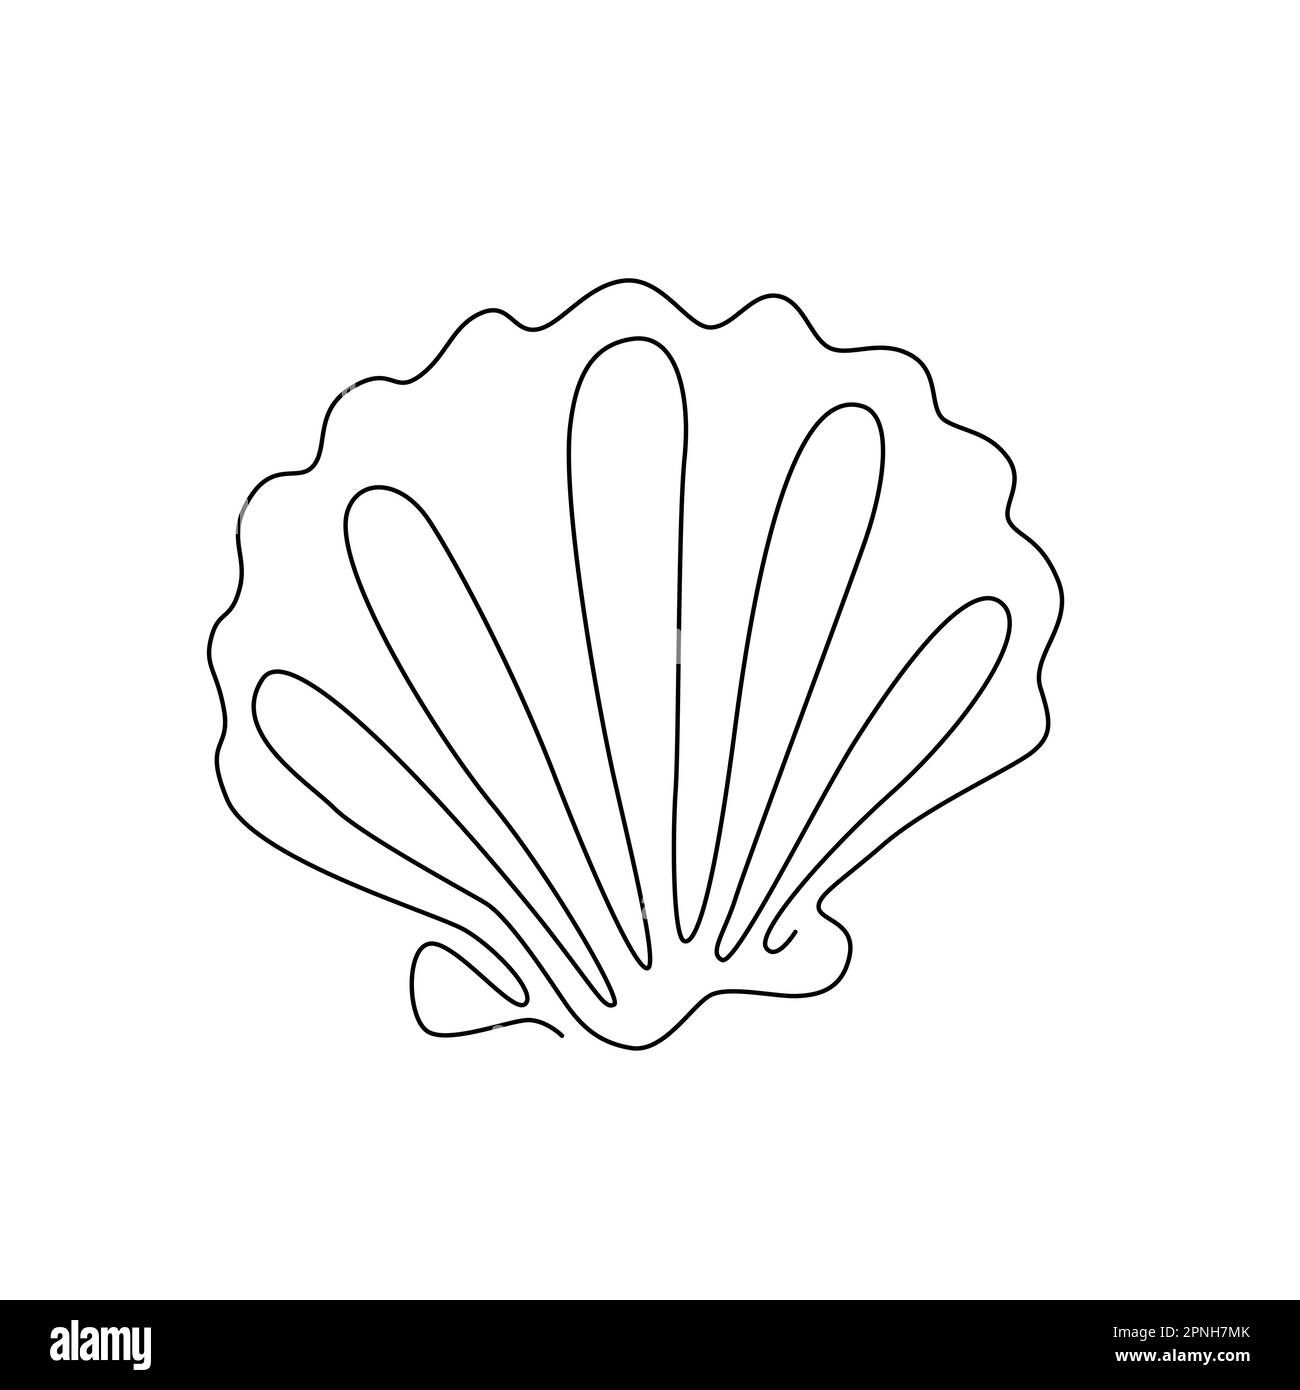 Zentangle stylized shell. Stock Vector by ©frescomovie 105415958